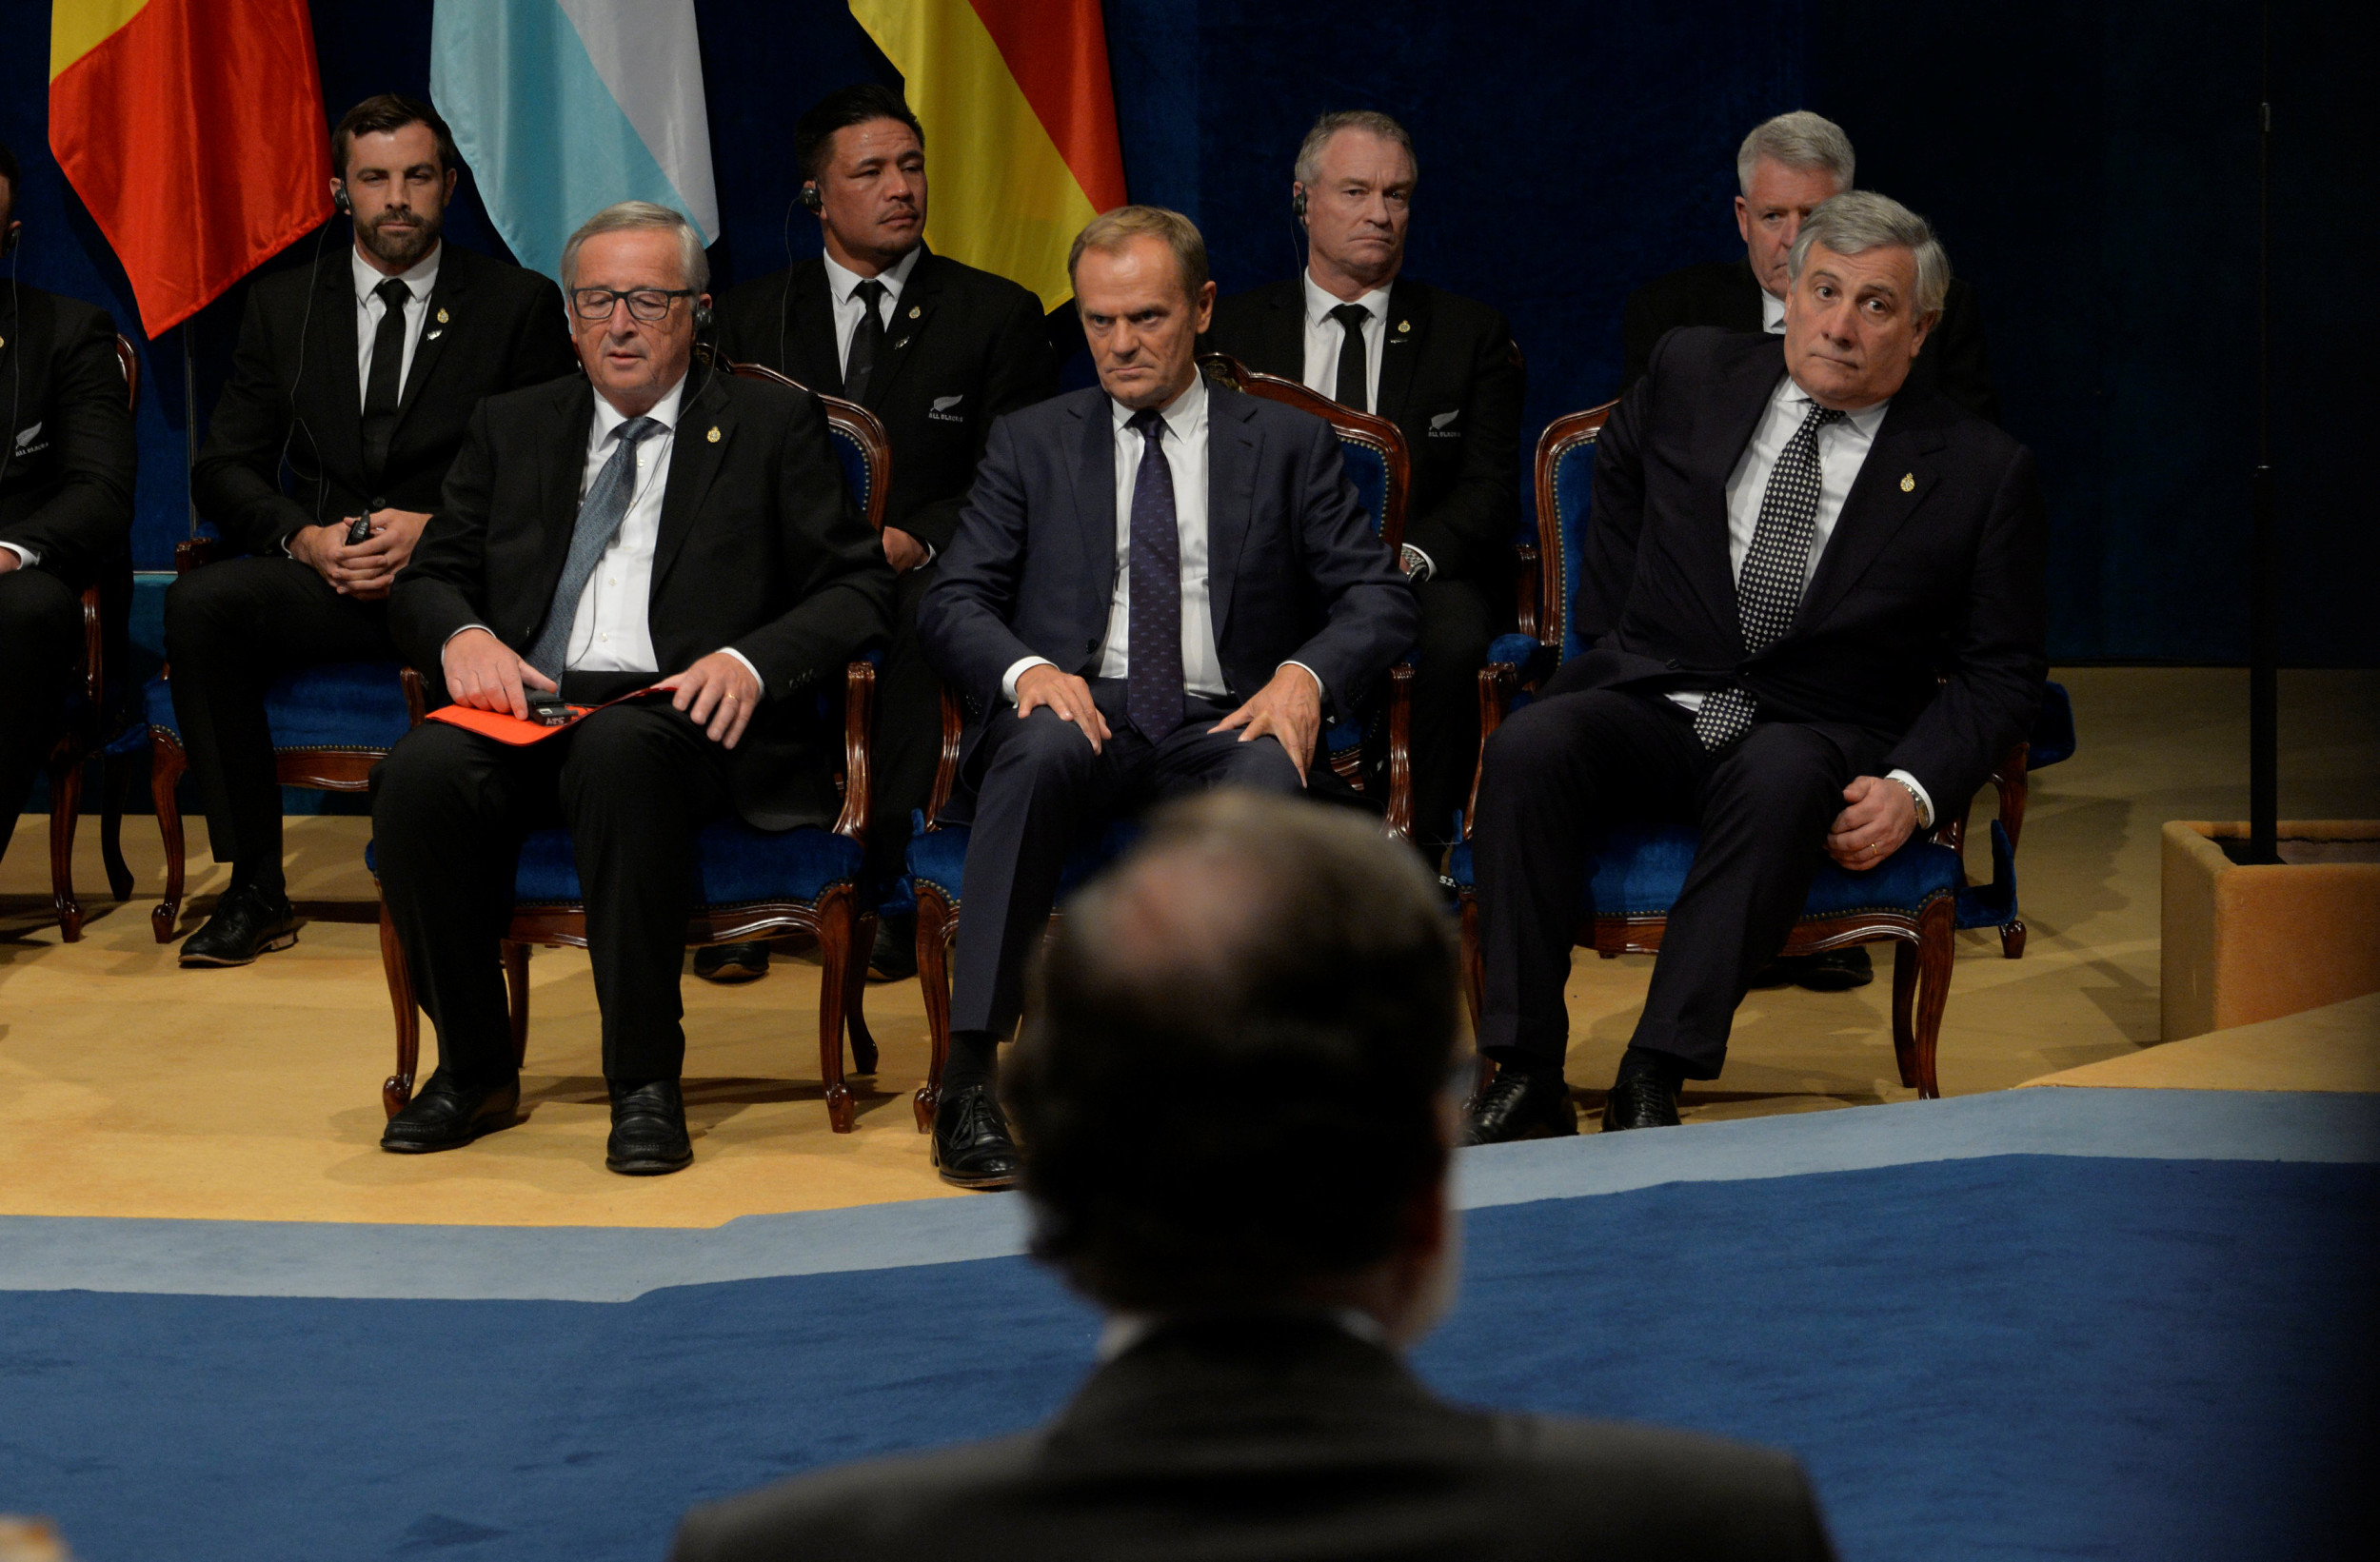 Jean-Claude Juncker, Donald Tusk, and Antonio Tajani at the event for the Princess of Asturias Award of Concordia 2017